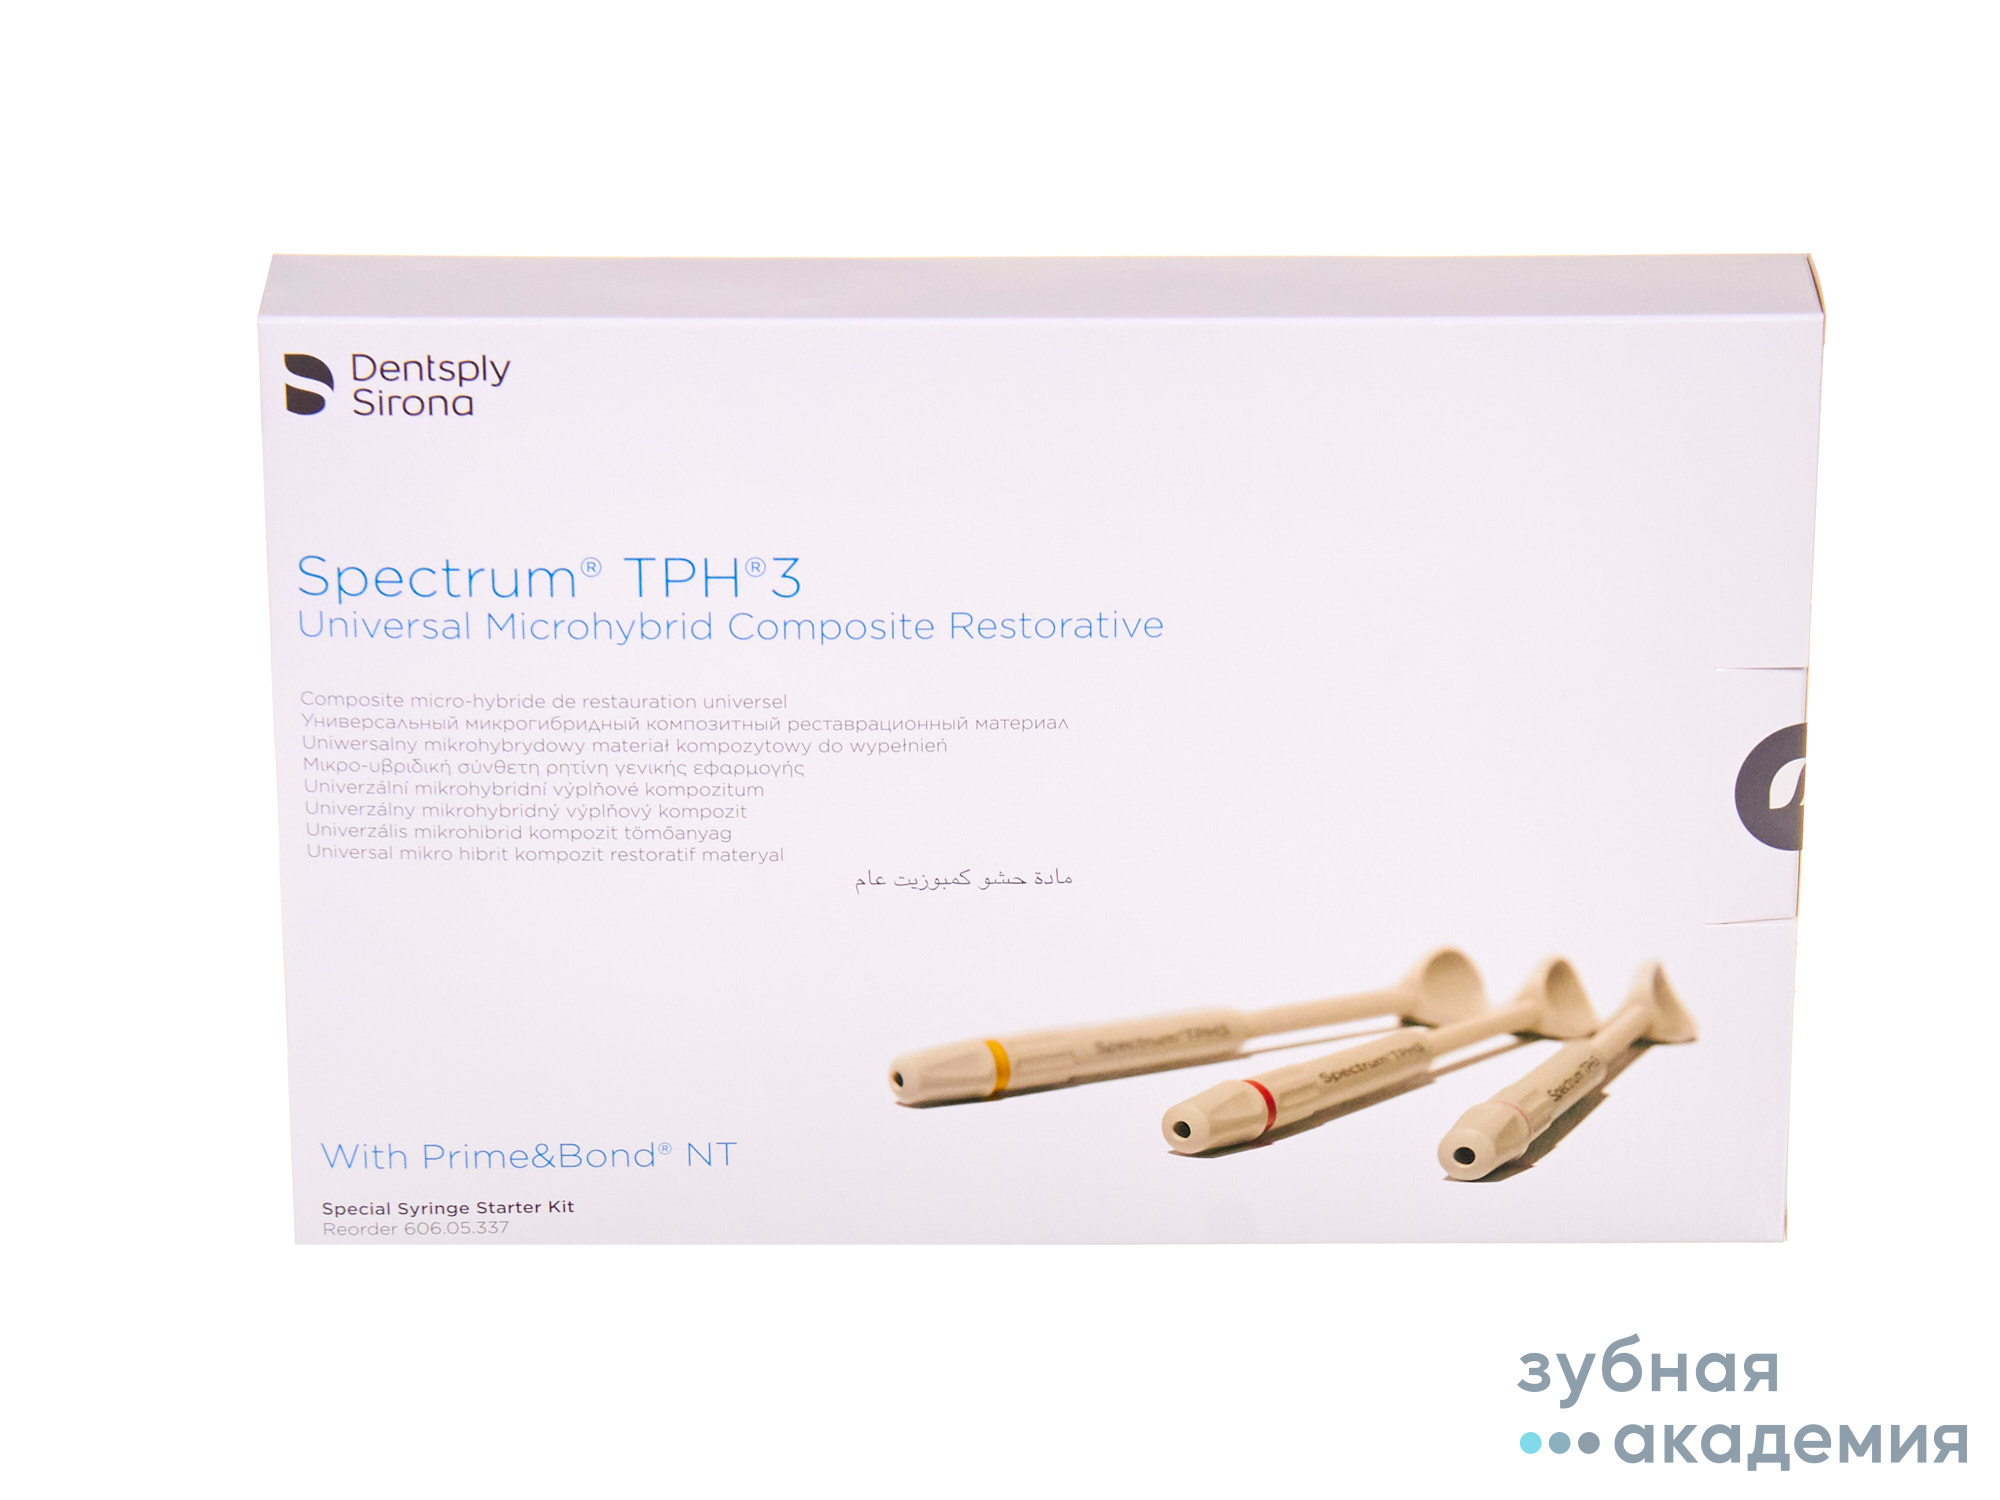 Spectrum TPH3 Спектрум набор упаковка  6 шпрх4,5г /Dentsply/ Германия